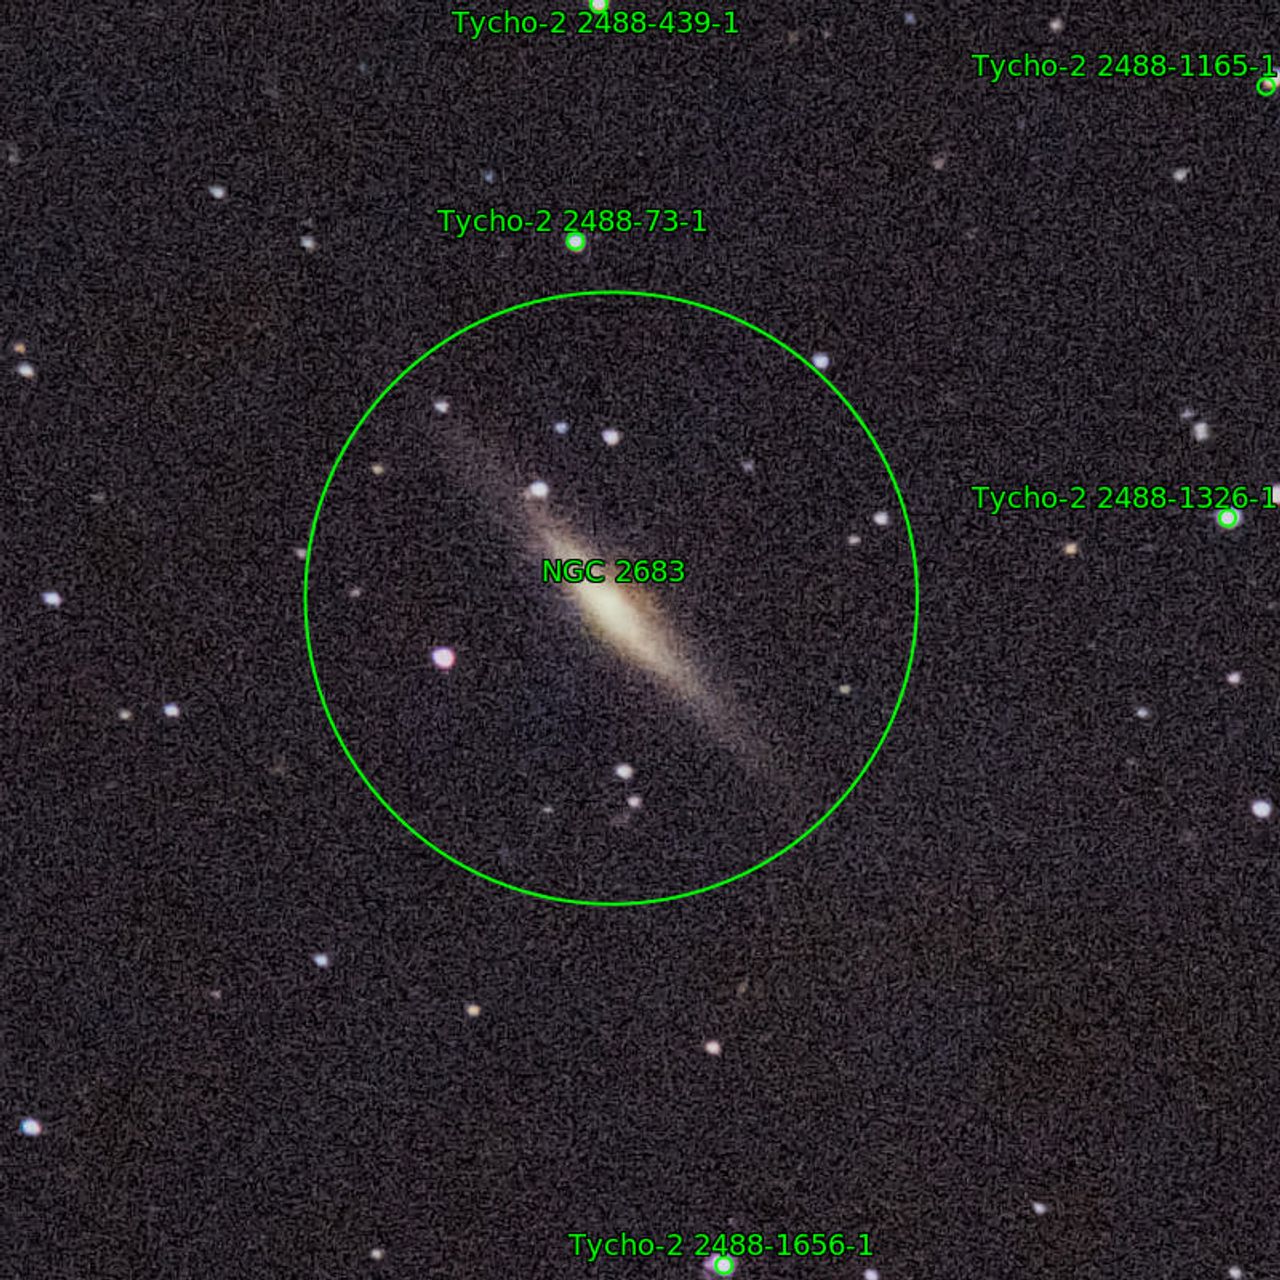 Annotation around NGC2683